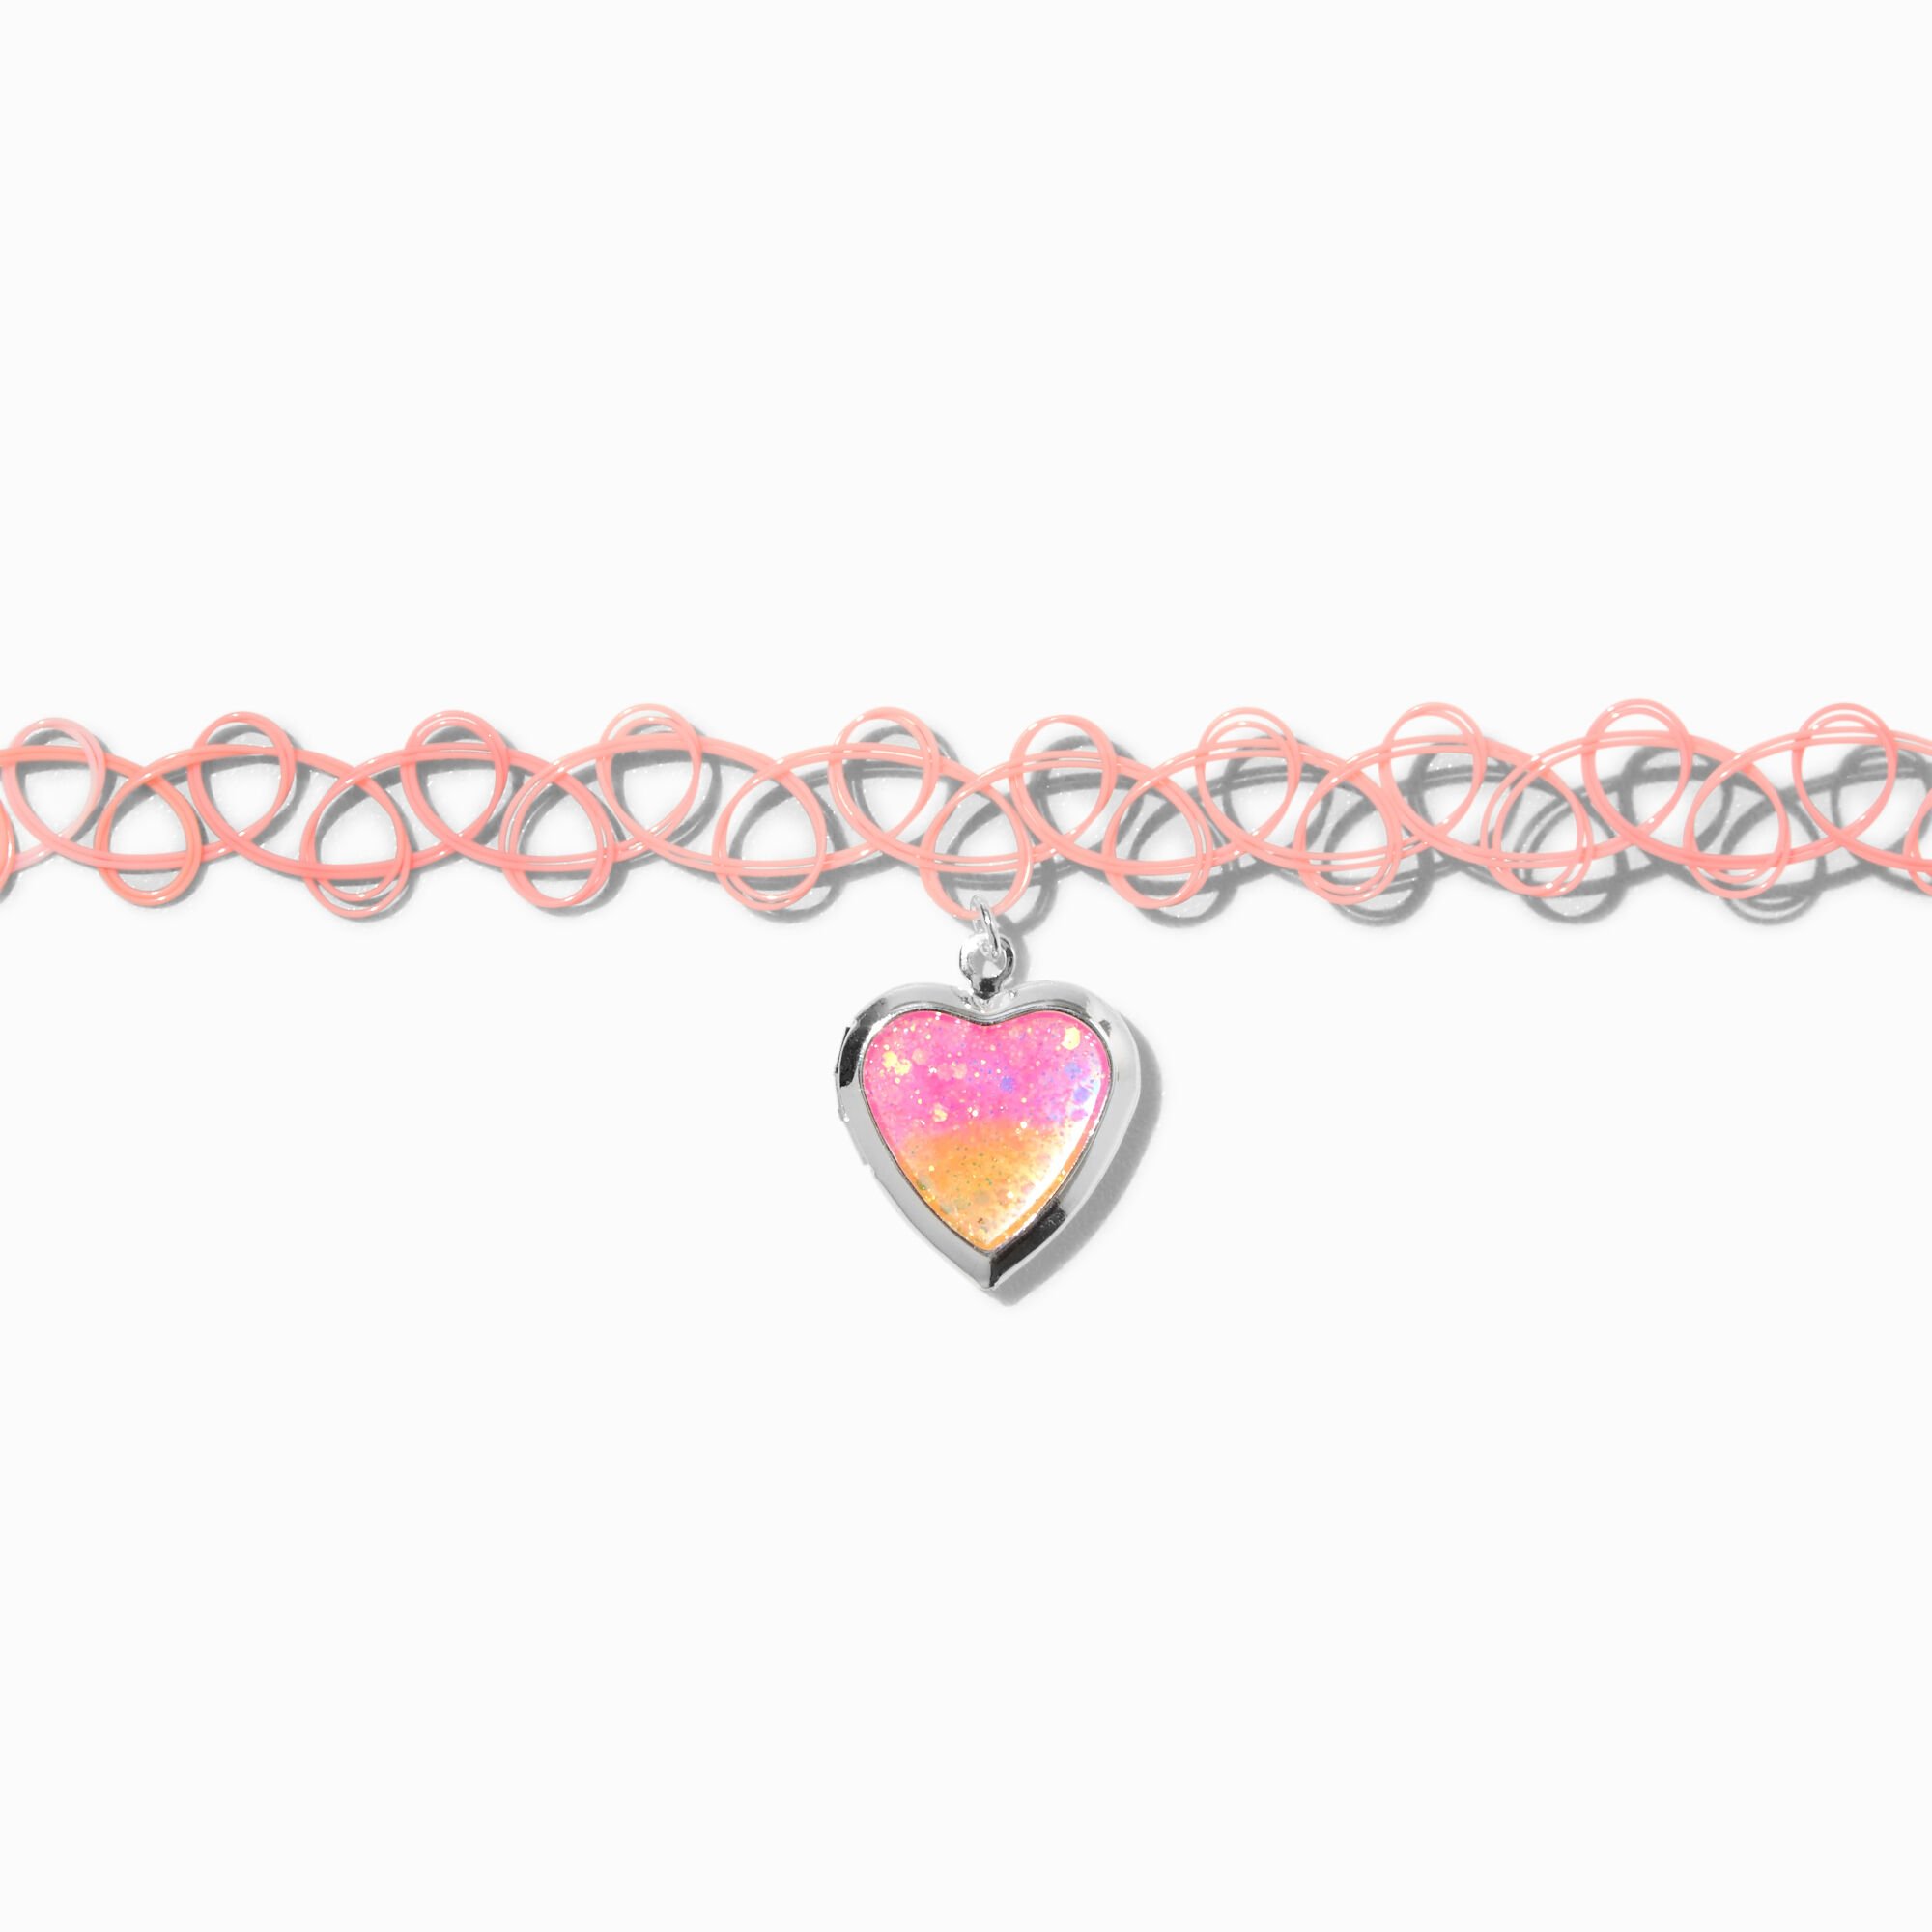 View Claires Heart Locket Pendant GlowInTheDark Tattoo Choker Necklace Pink information